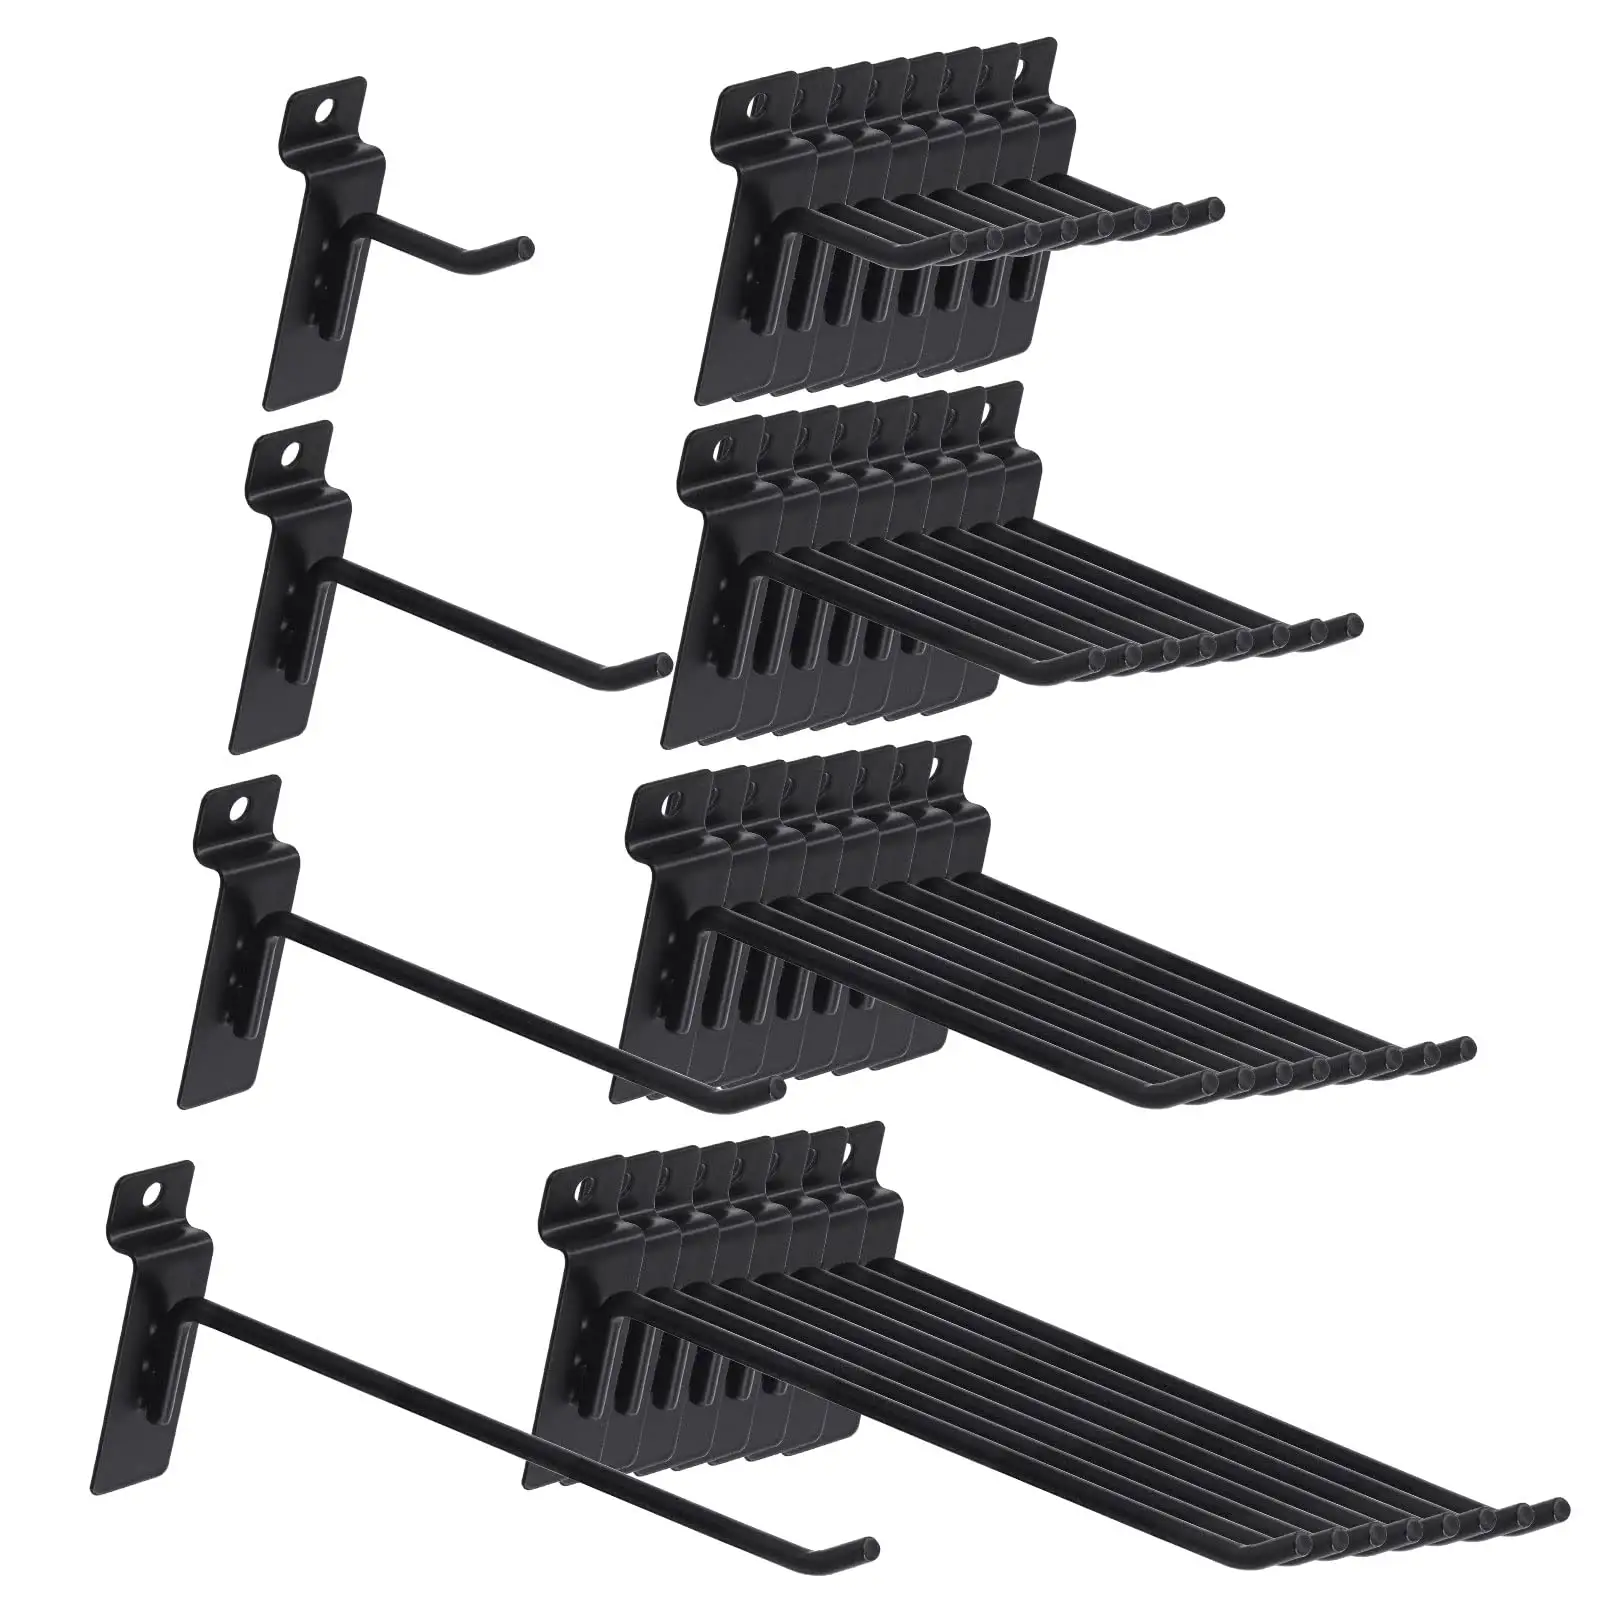 45 Degree Upturend End Slat Wall Hanger Hooks Assortment Kit Corrosion-Resistant Black Steel Garage Shop Retail Slatwall Hooks